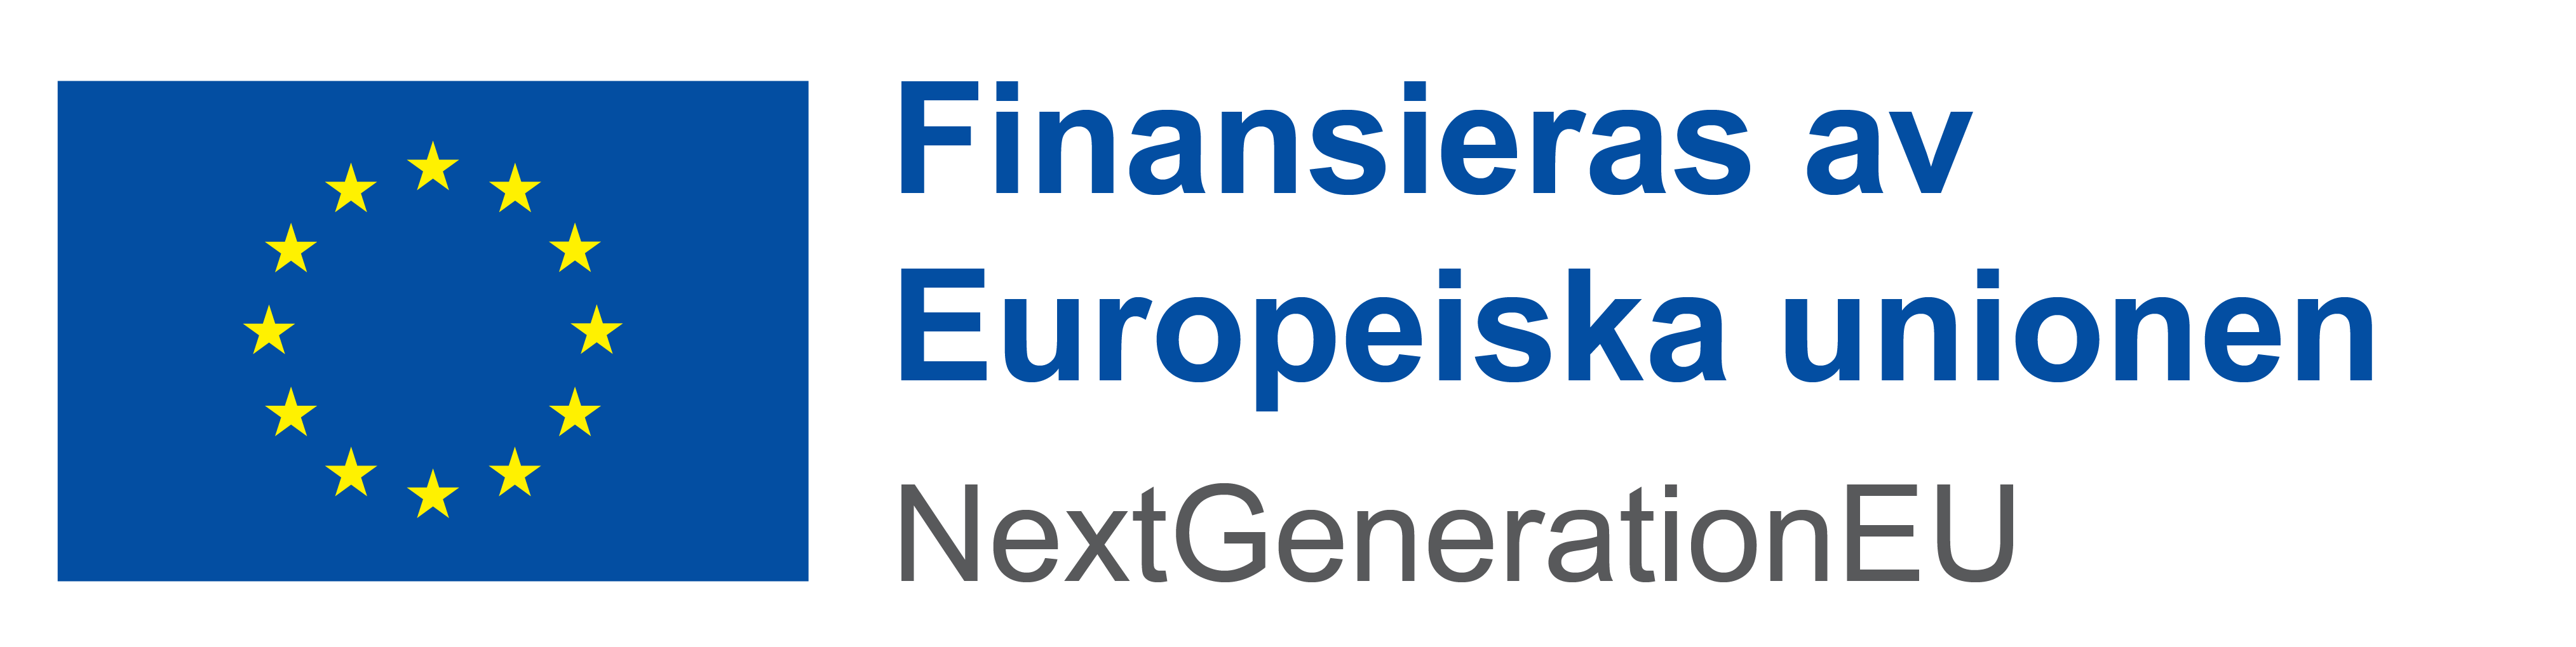 Logotyp, EU